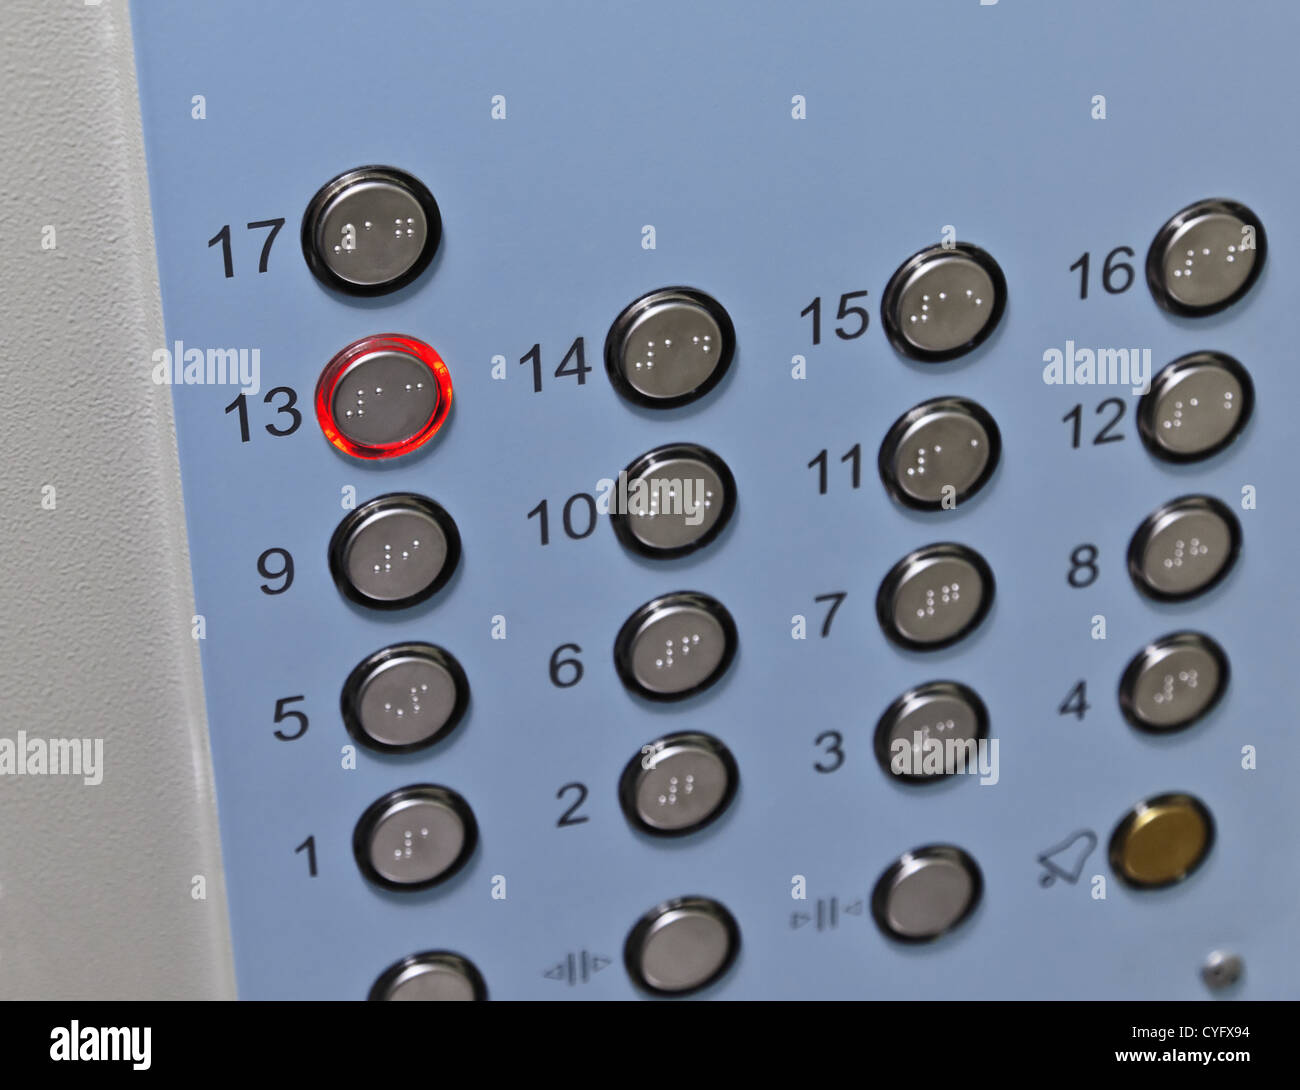 Focus on the thirteenth floor button elevator control panel Stock Photo